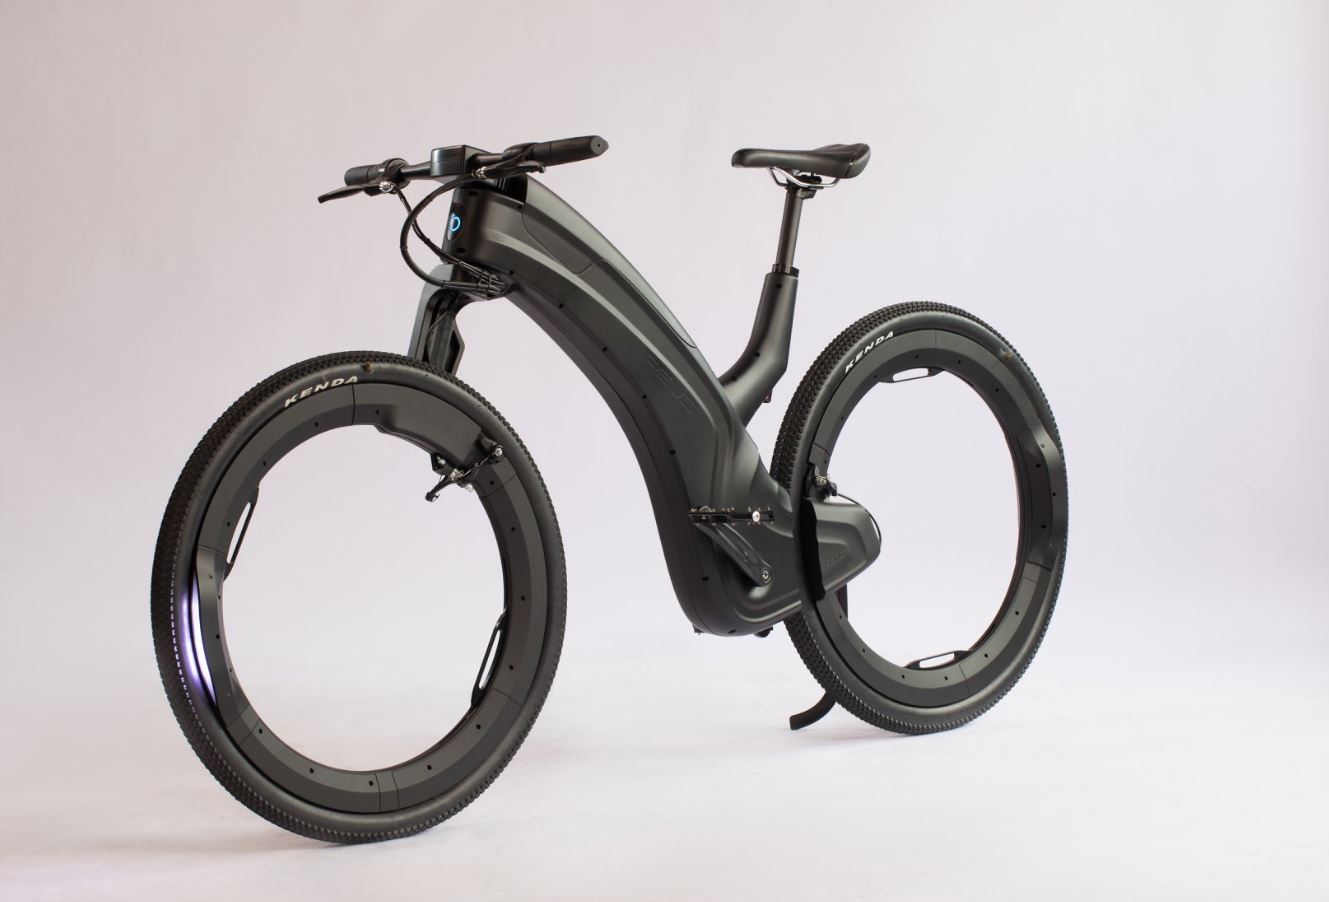 Reevo Hubless Bike Is What Futuristic eBike Dreams Are Made Of